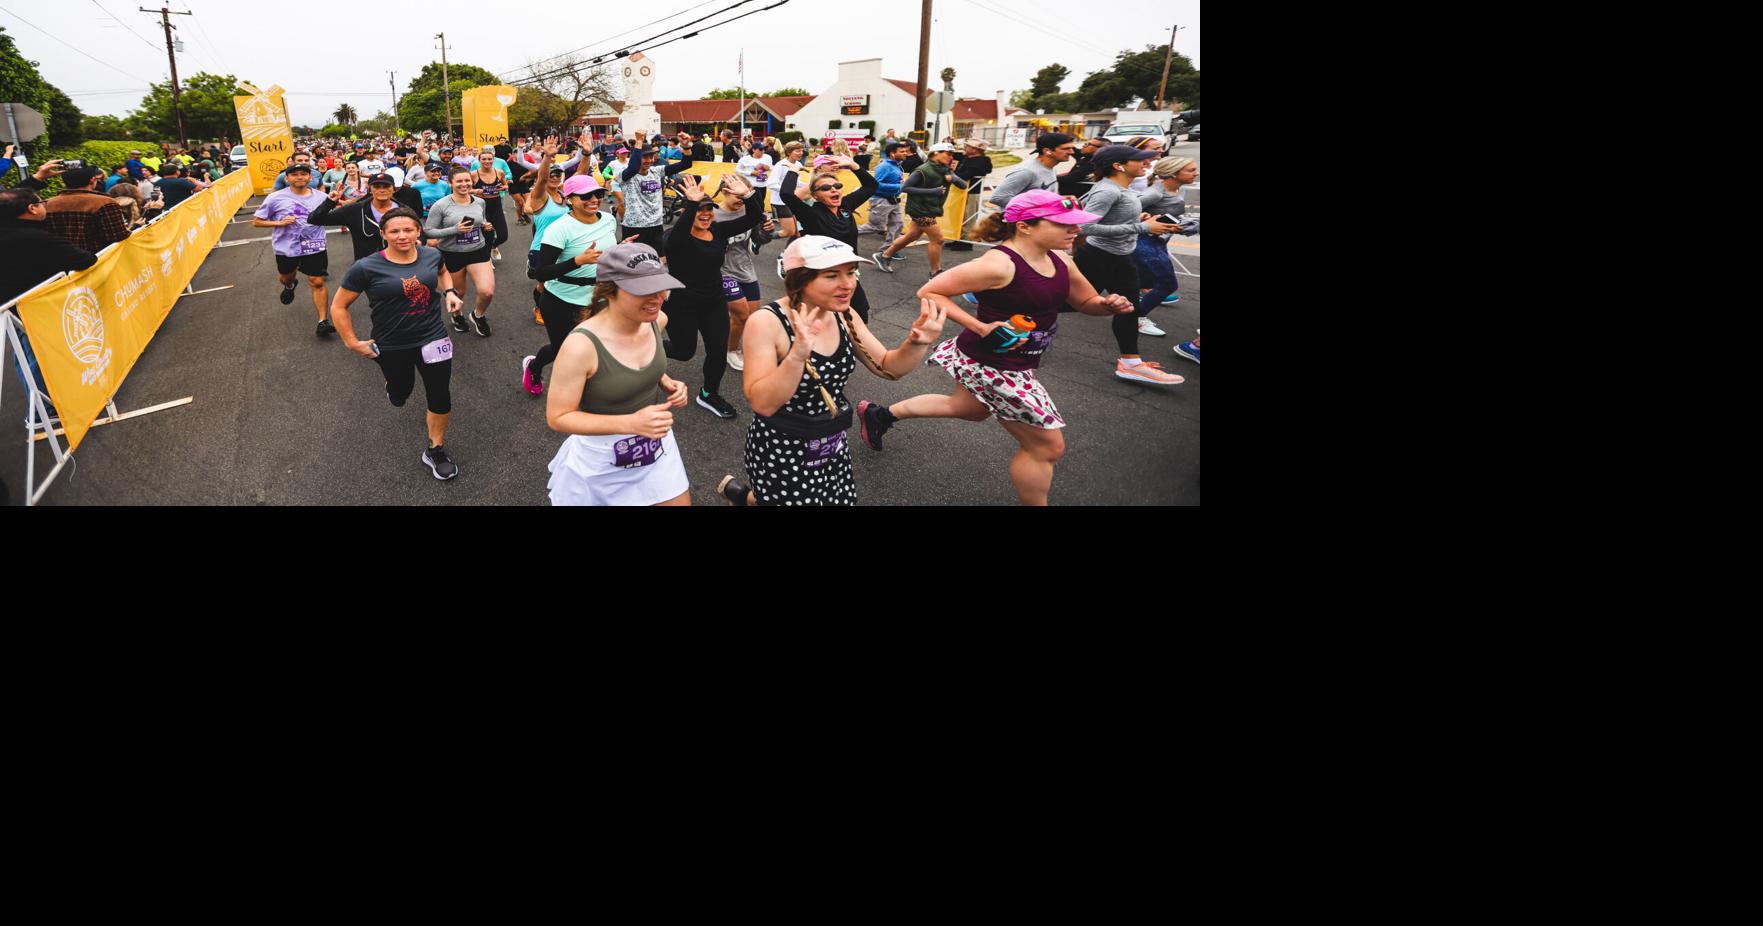 Santa Barbara Wine Country Half Marathon brings thousands to Solvang